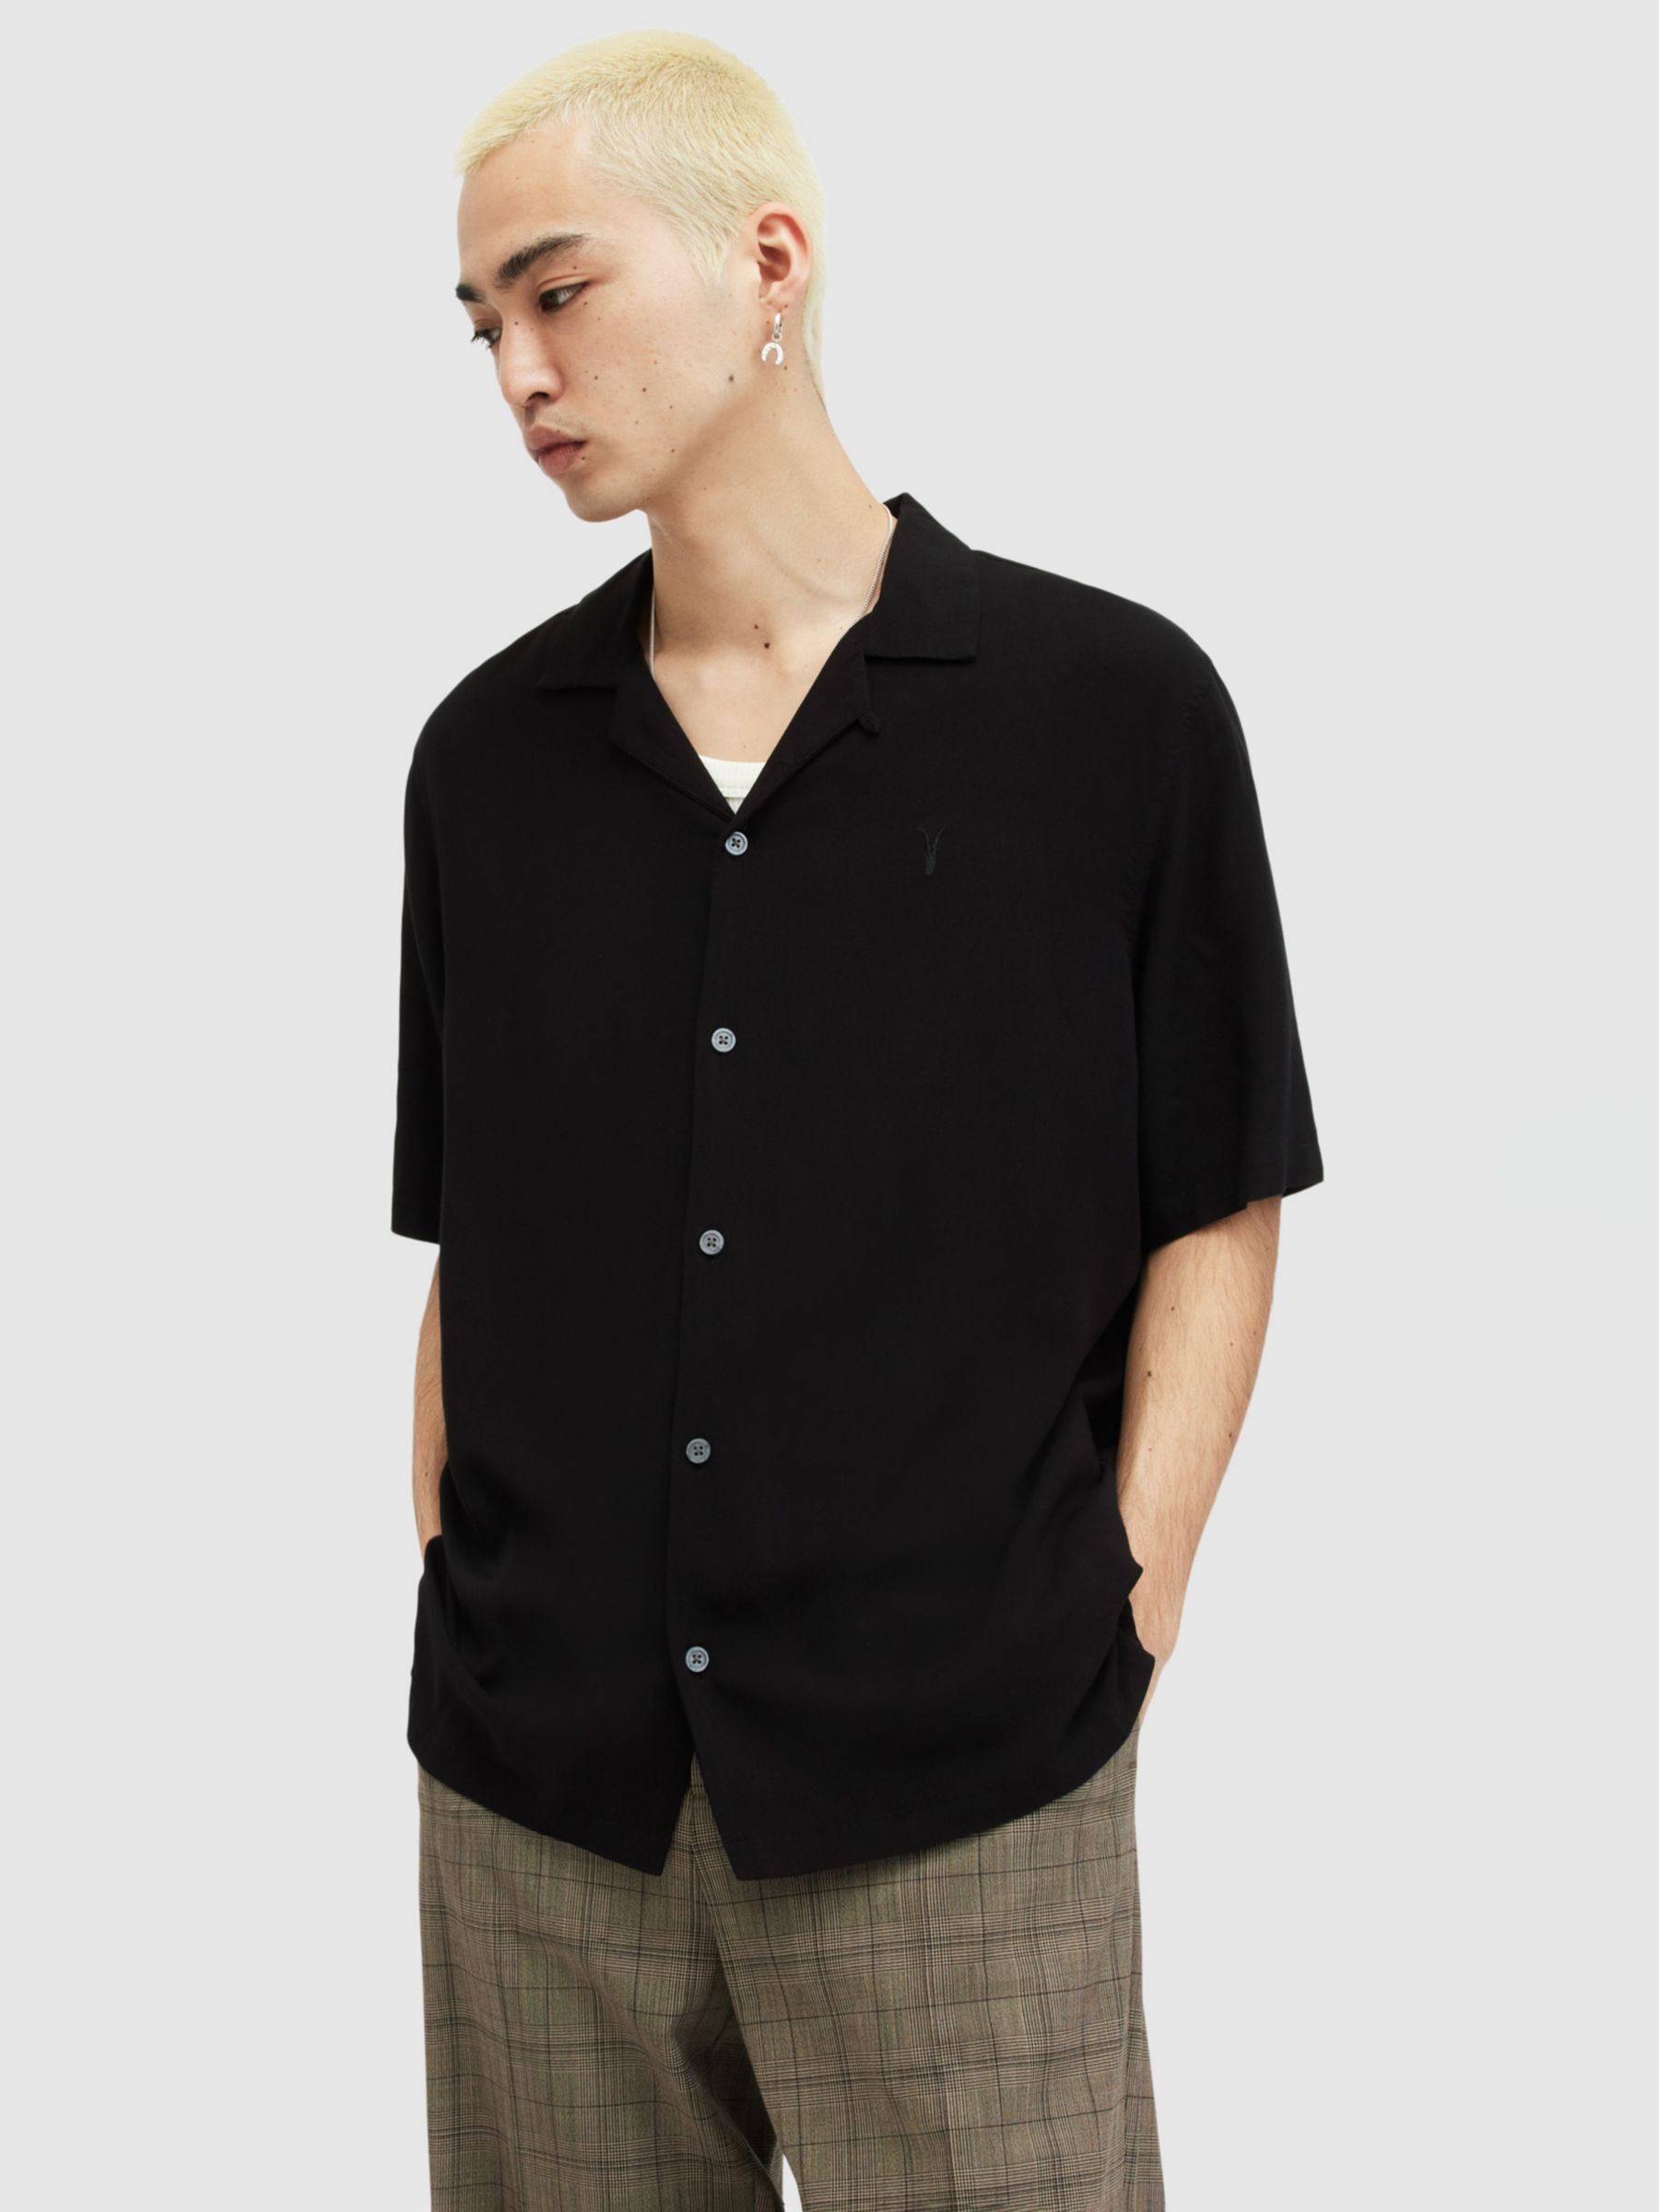 AllSaints Venice Short Sleeve Shirt, Black at John Lewis & Partners